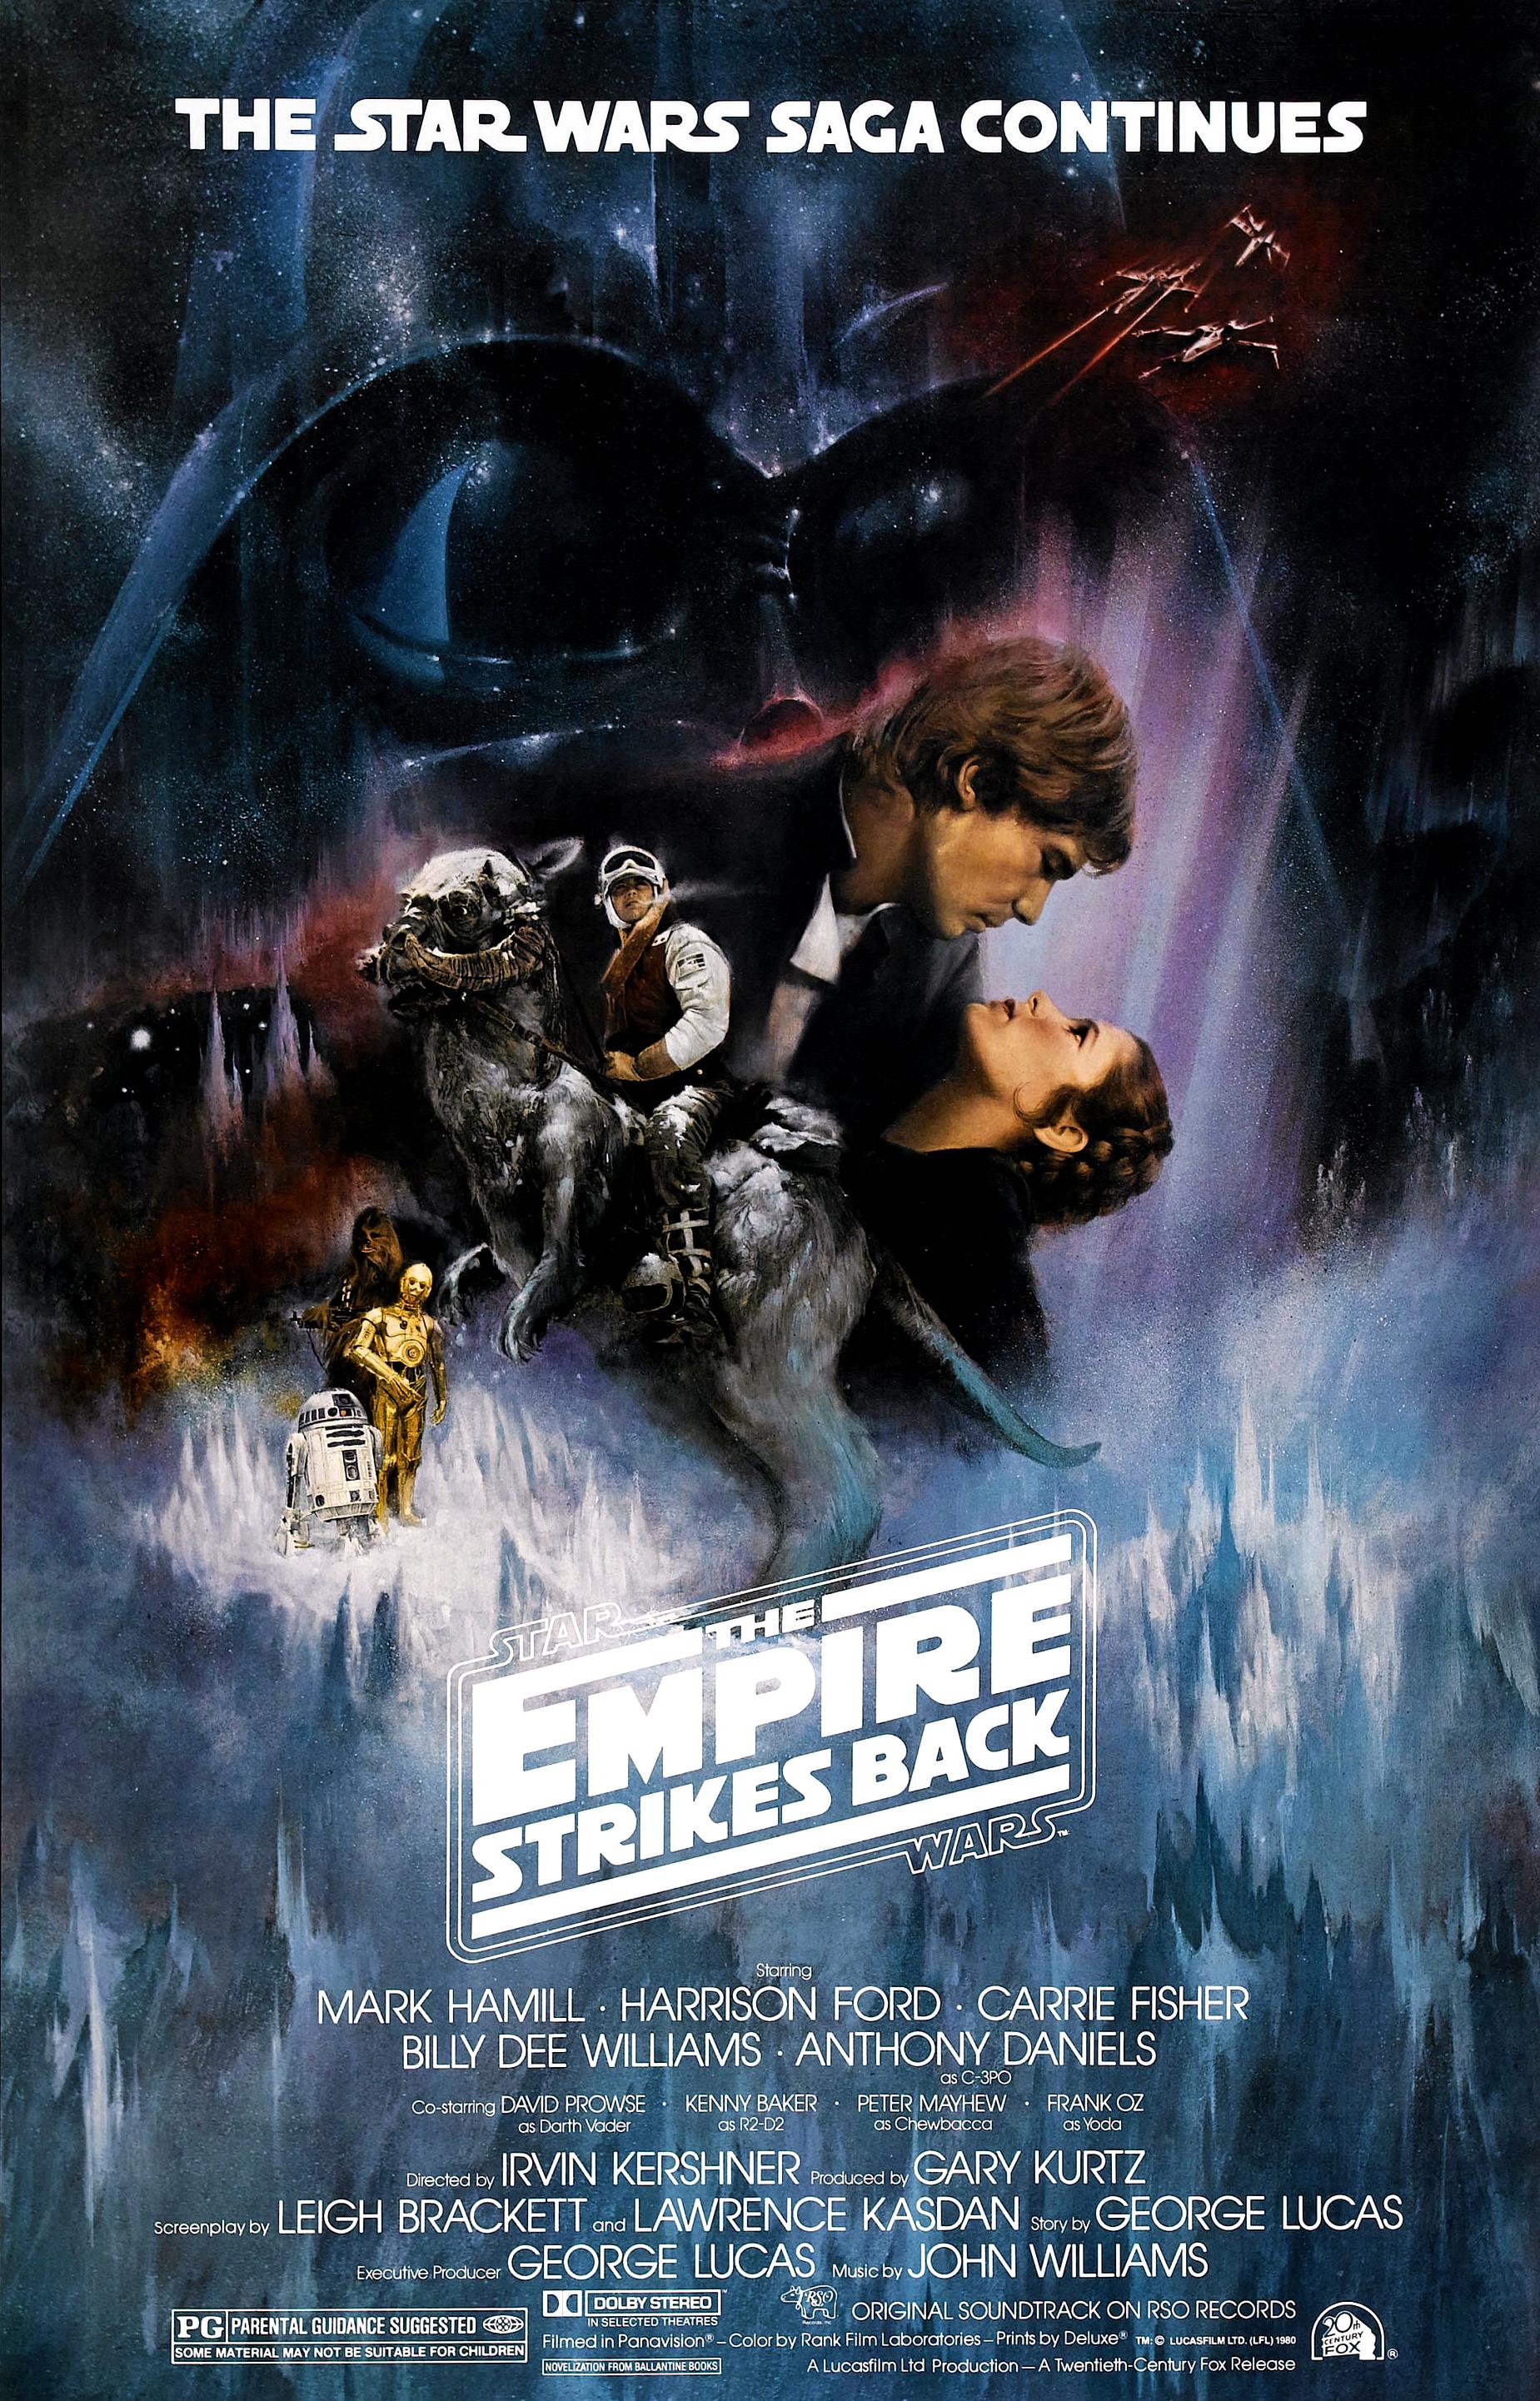 Star Wars Episode V The Empire Strikes Back movie poster